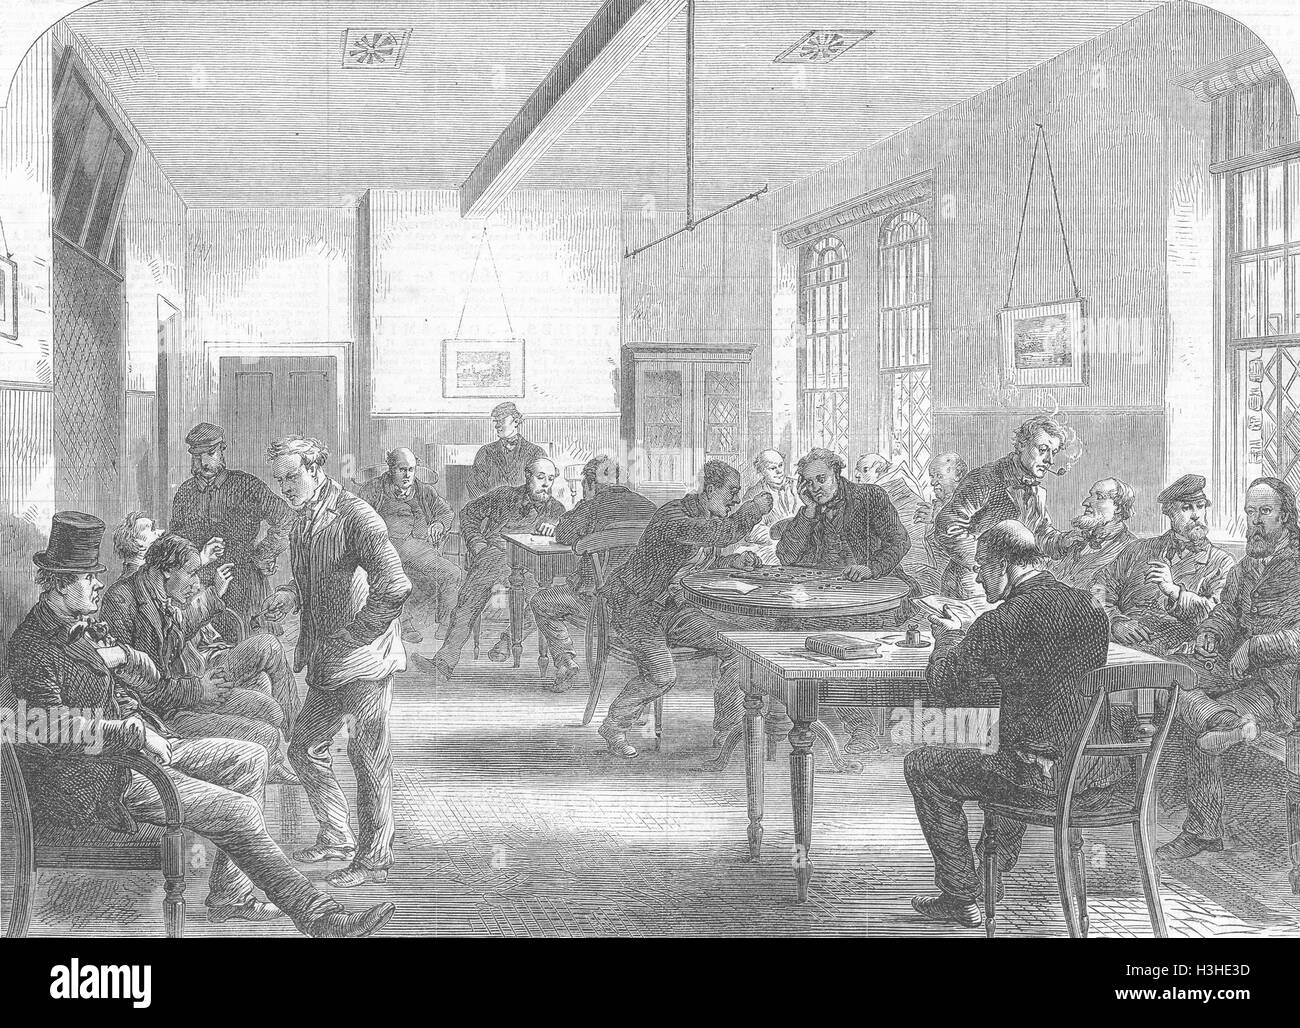 Broadmoor Lunatic Asylum Day Room Male Patients 1867